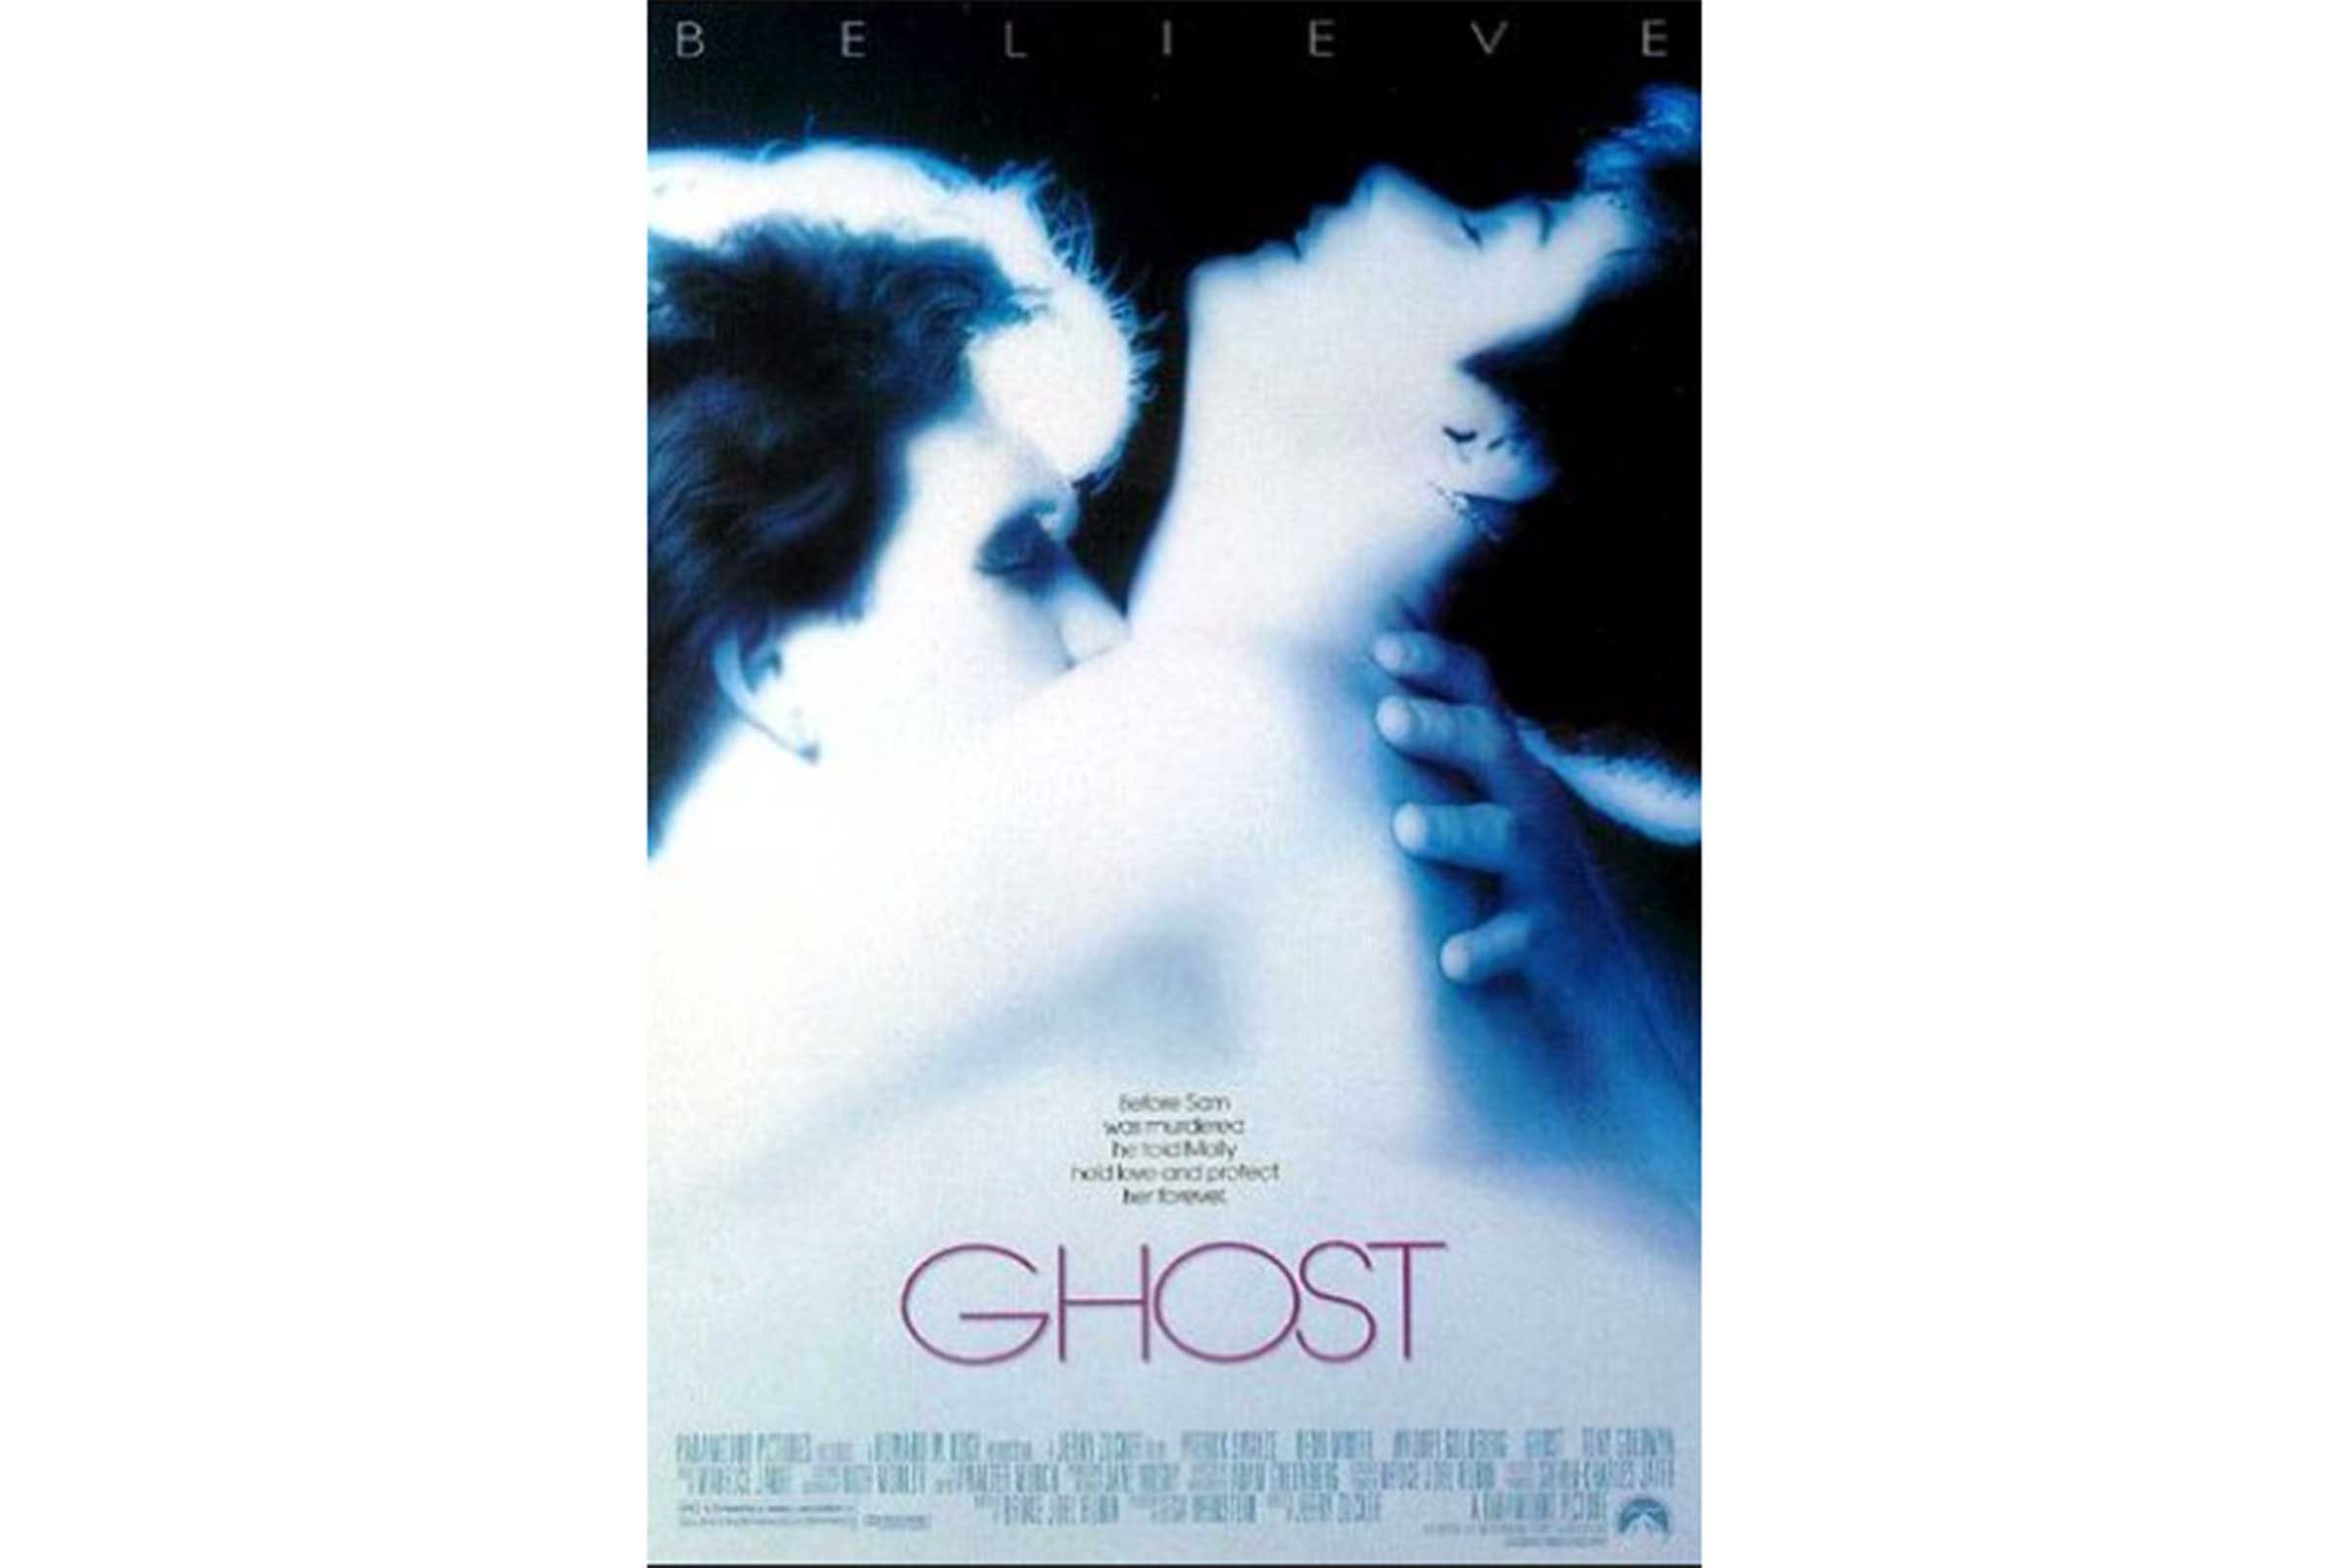 Ghost Town (2023) - IMDb